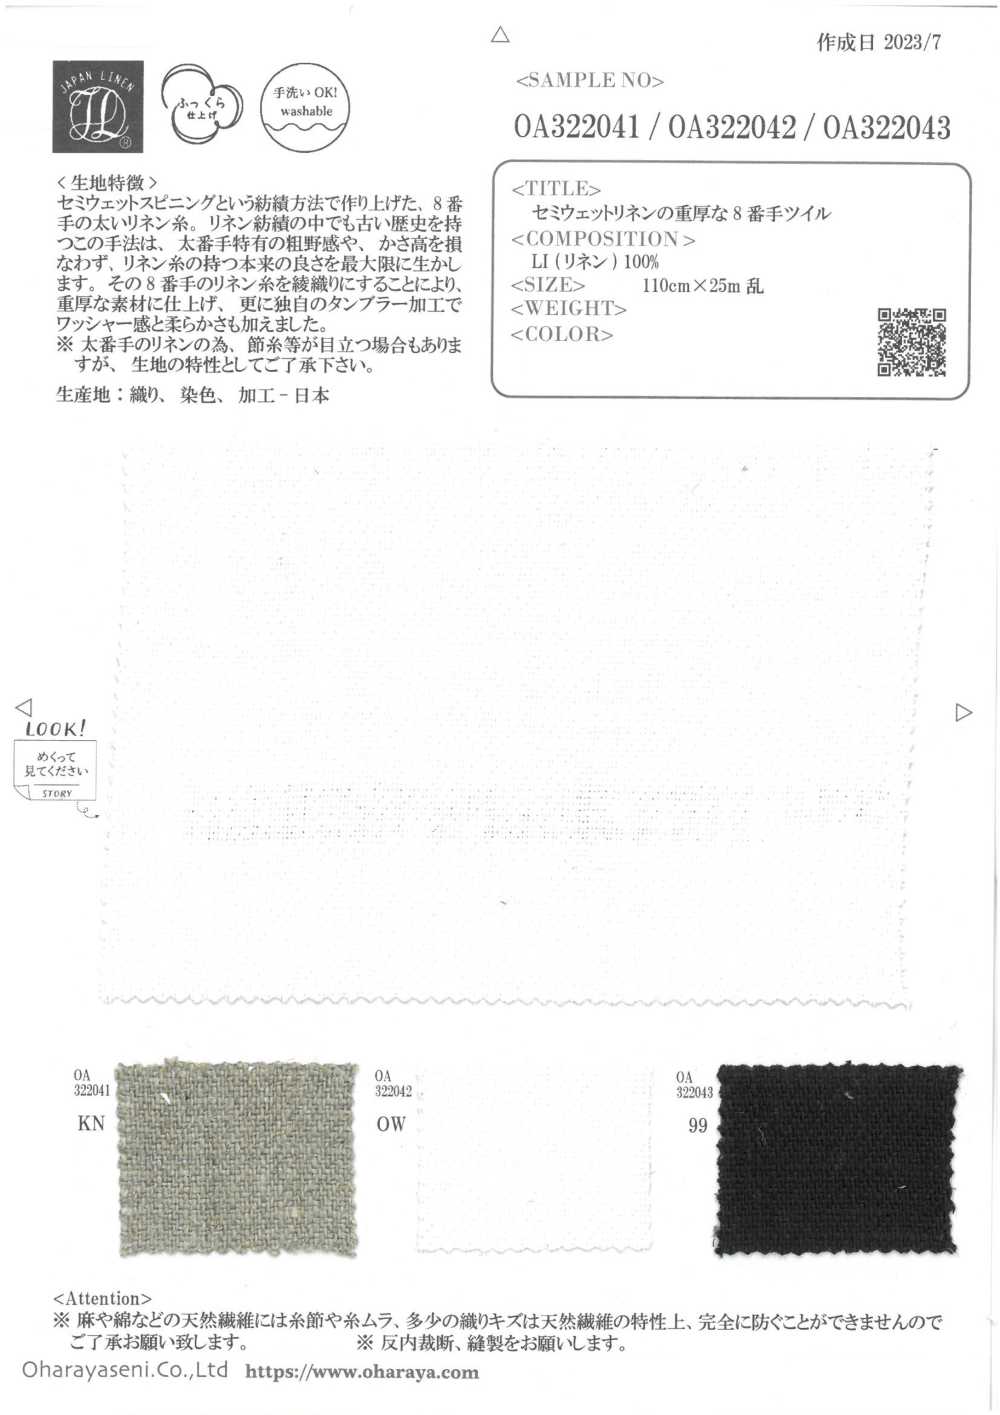 OA322043 Heavy #8 Twill Of Semi-wet Linen[Textile / Fabric] Oharayaseni